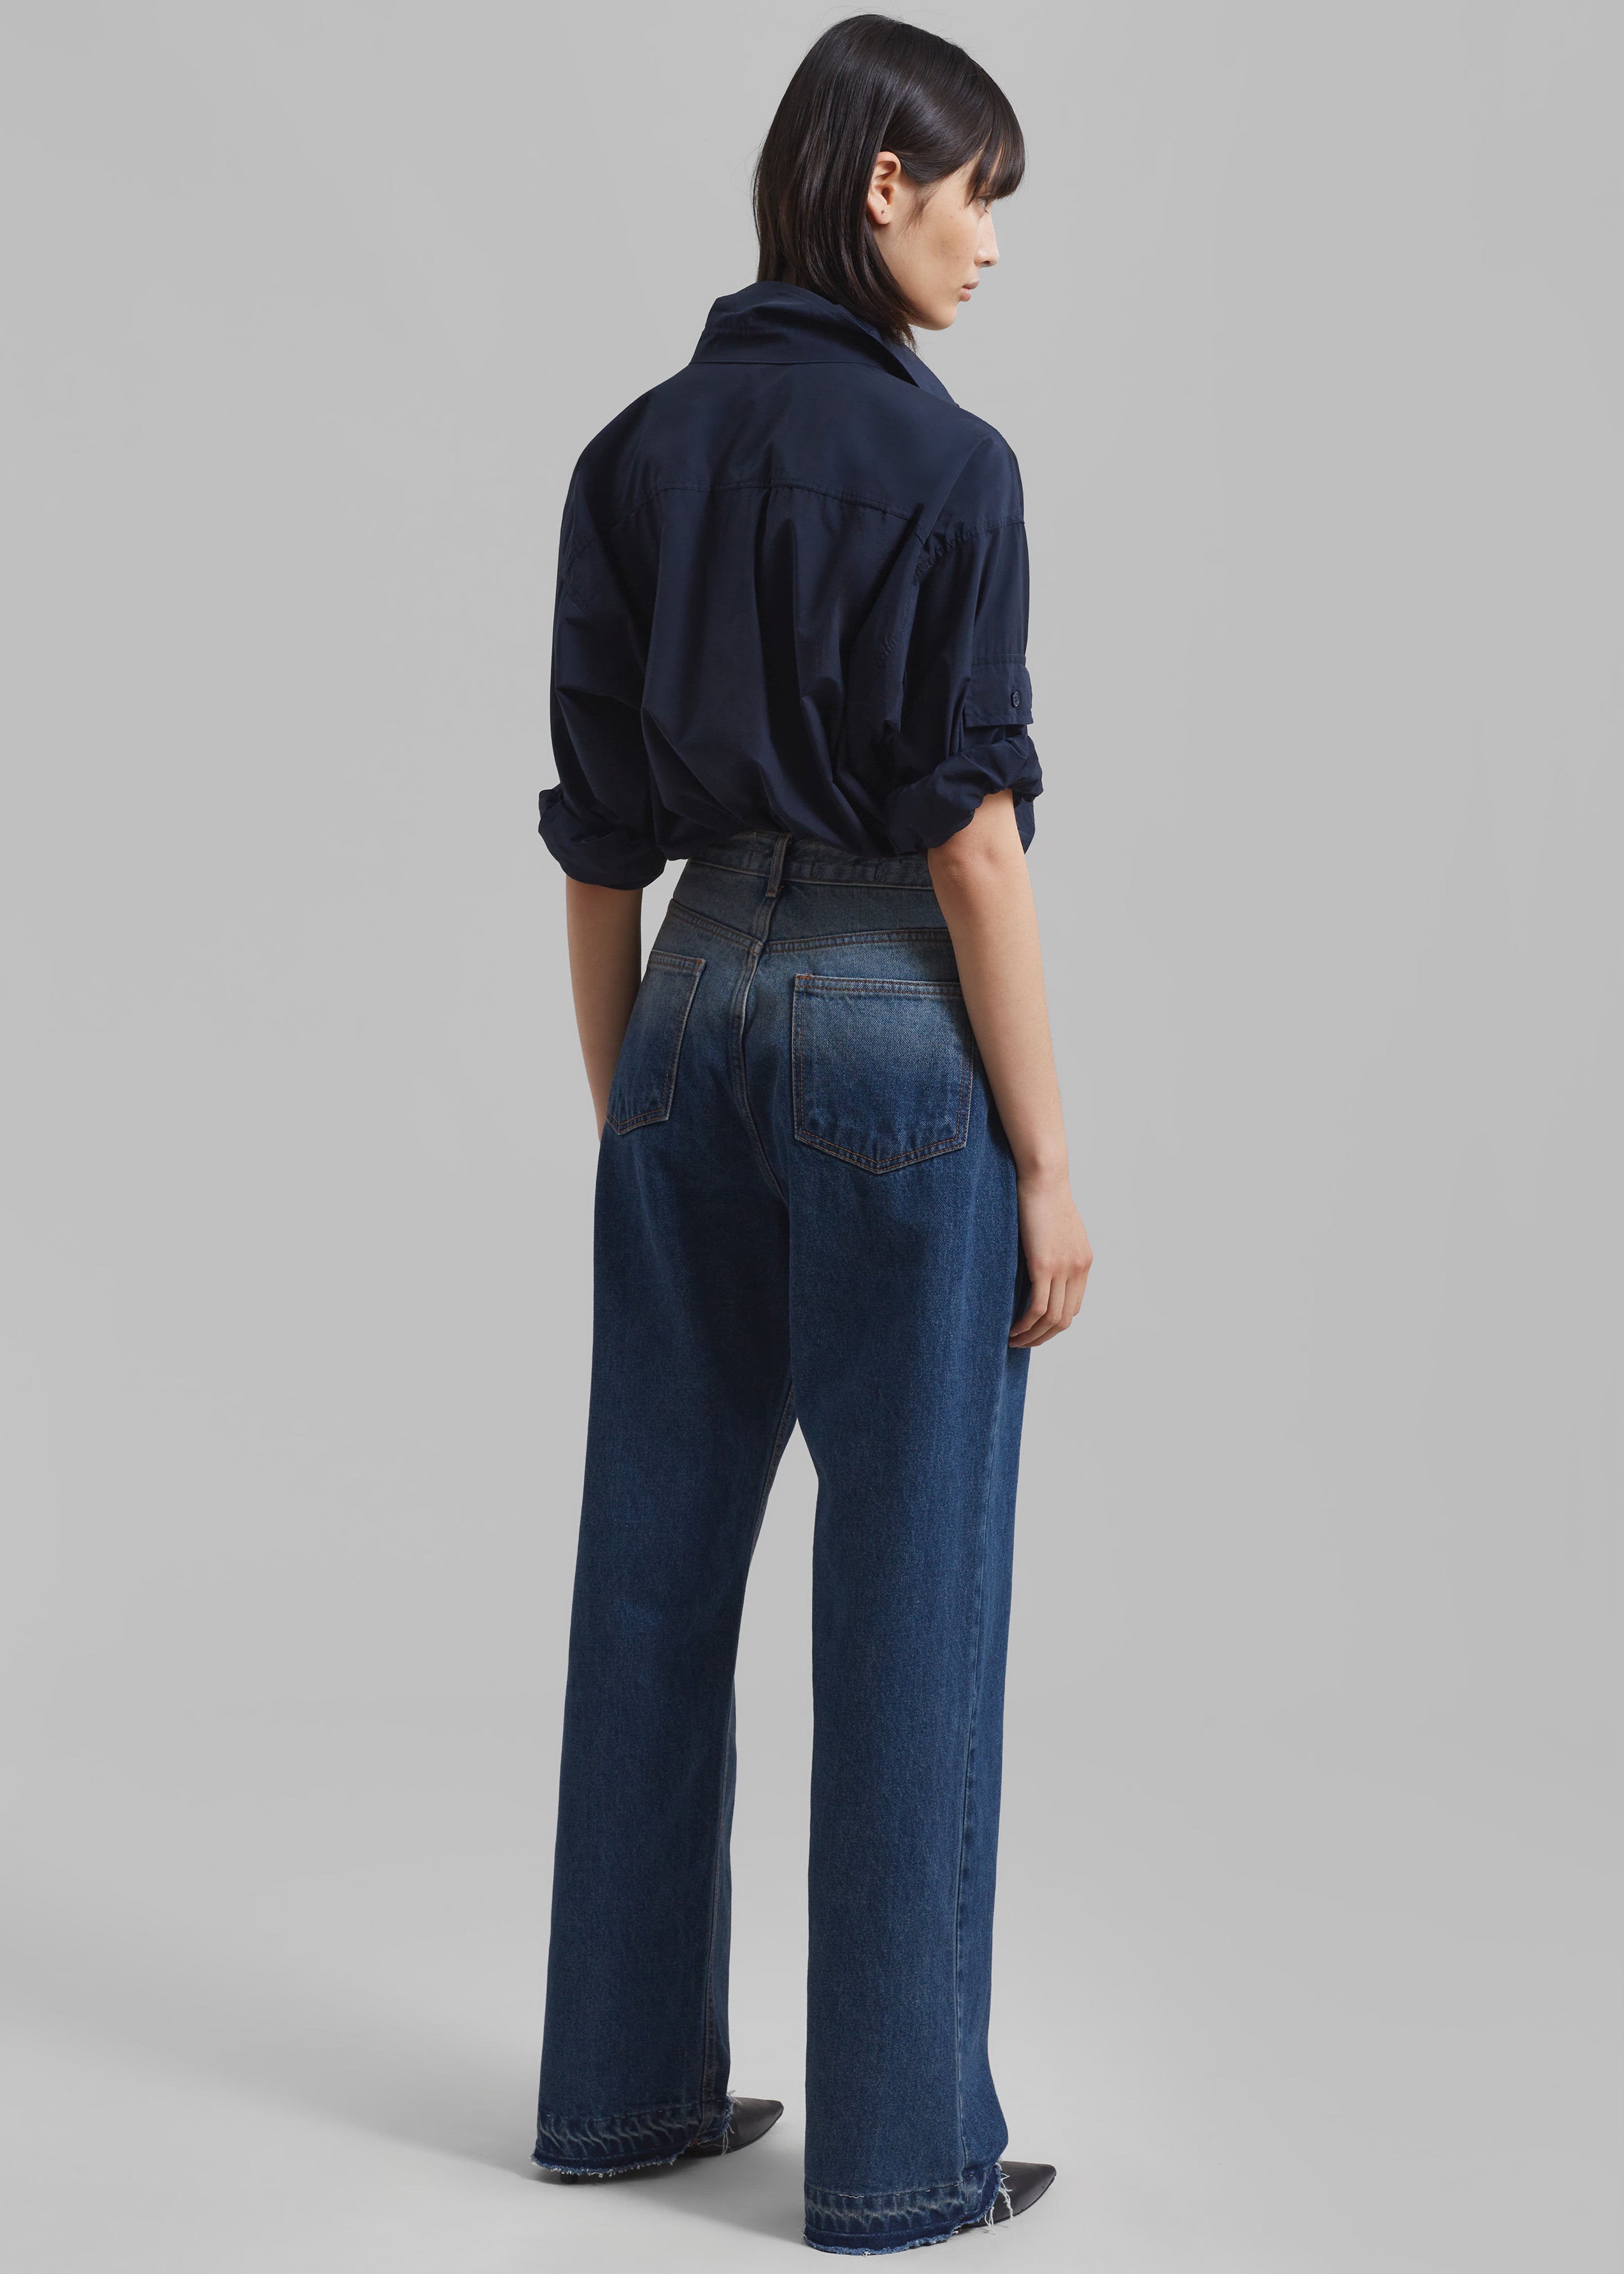 Myla Ombre Jeans - Medium Wash - 9